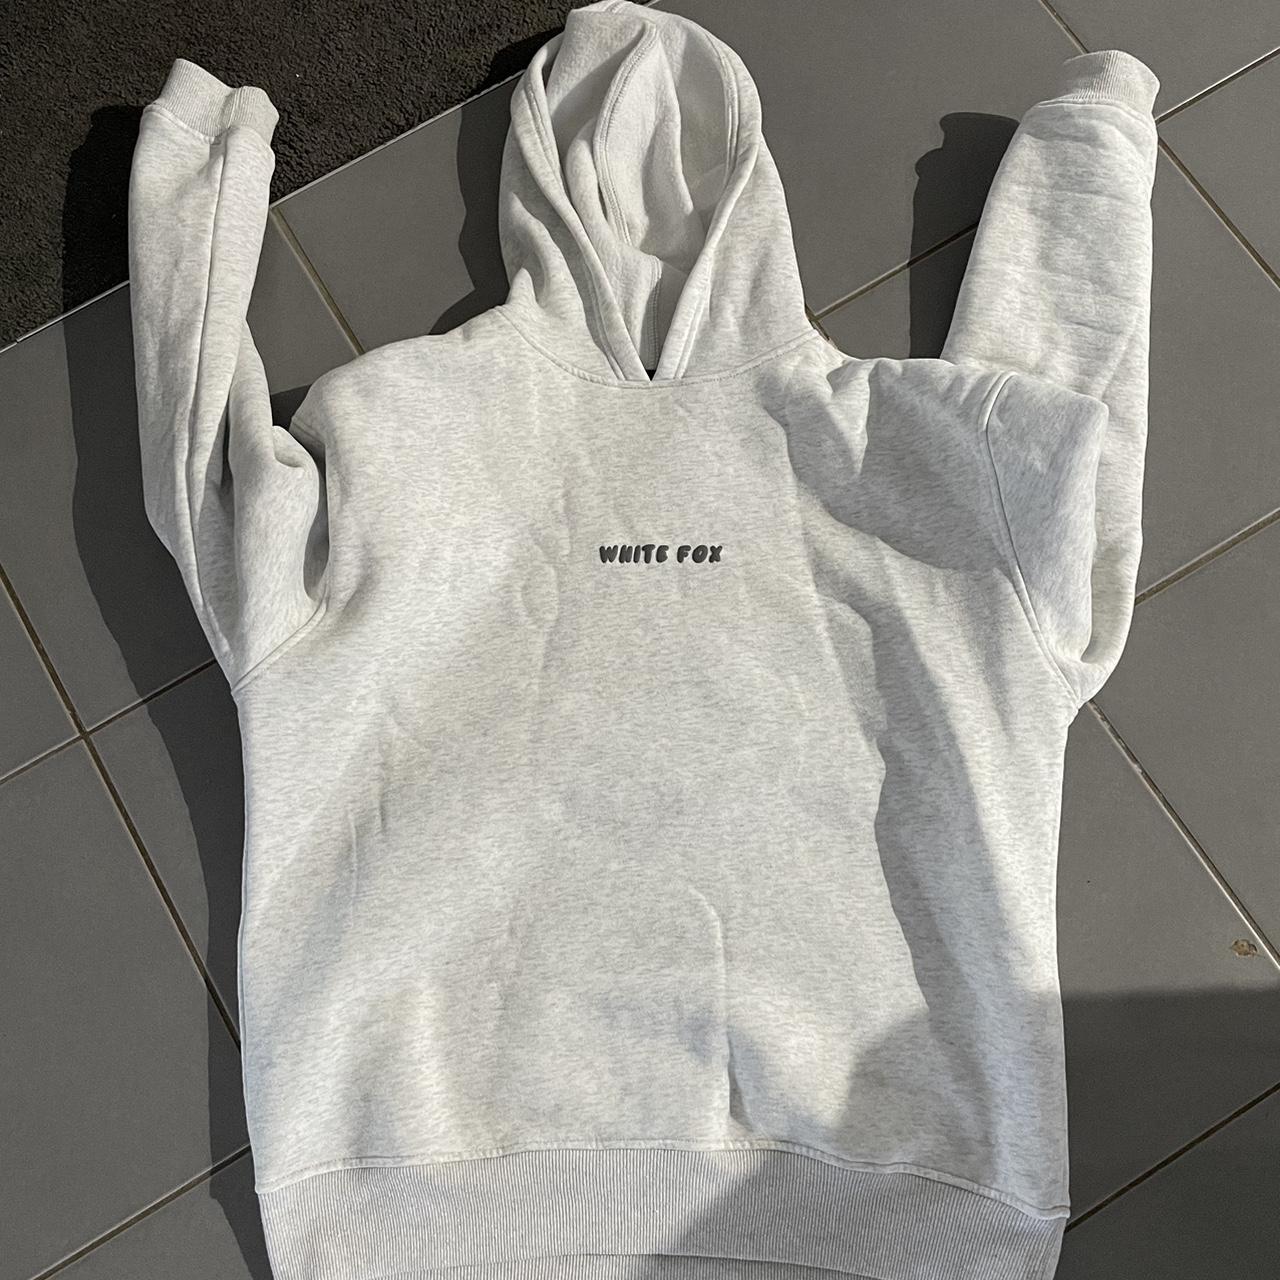 whitefox hoodie size XS/s Worn 3 times - Depop